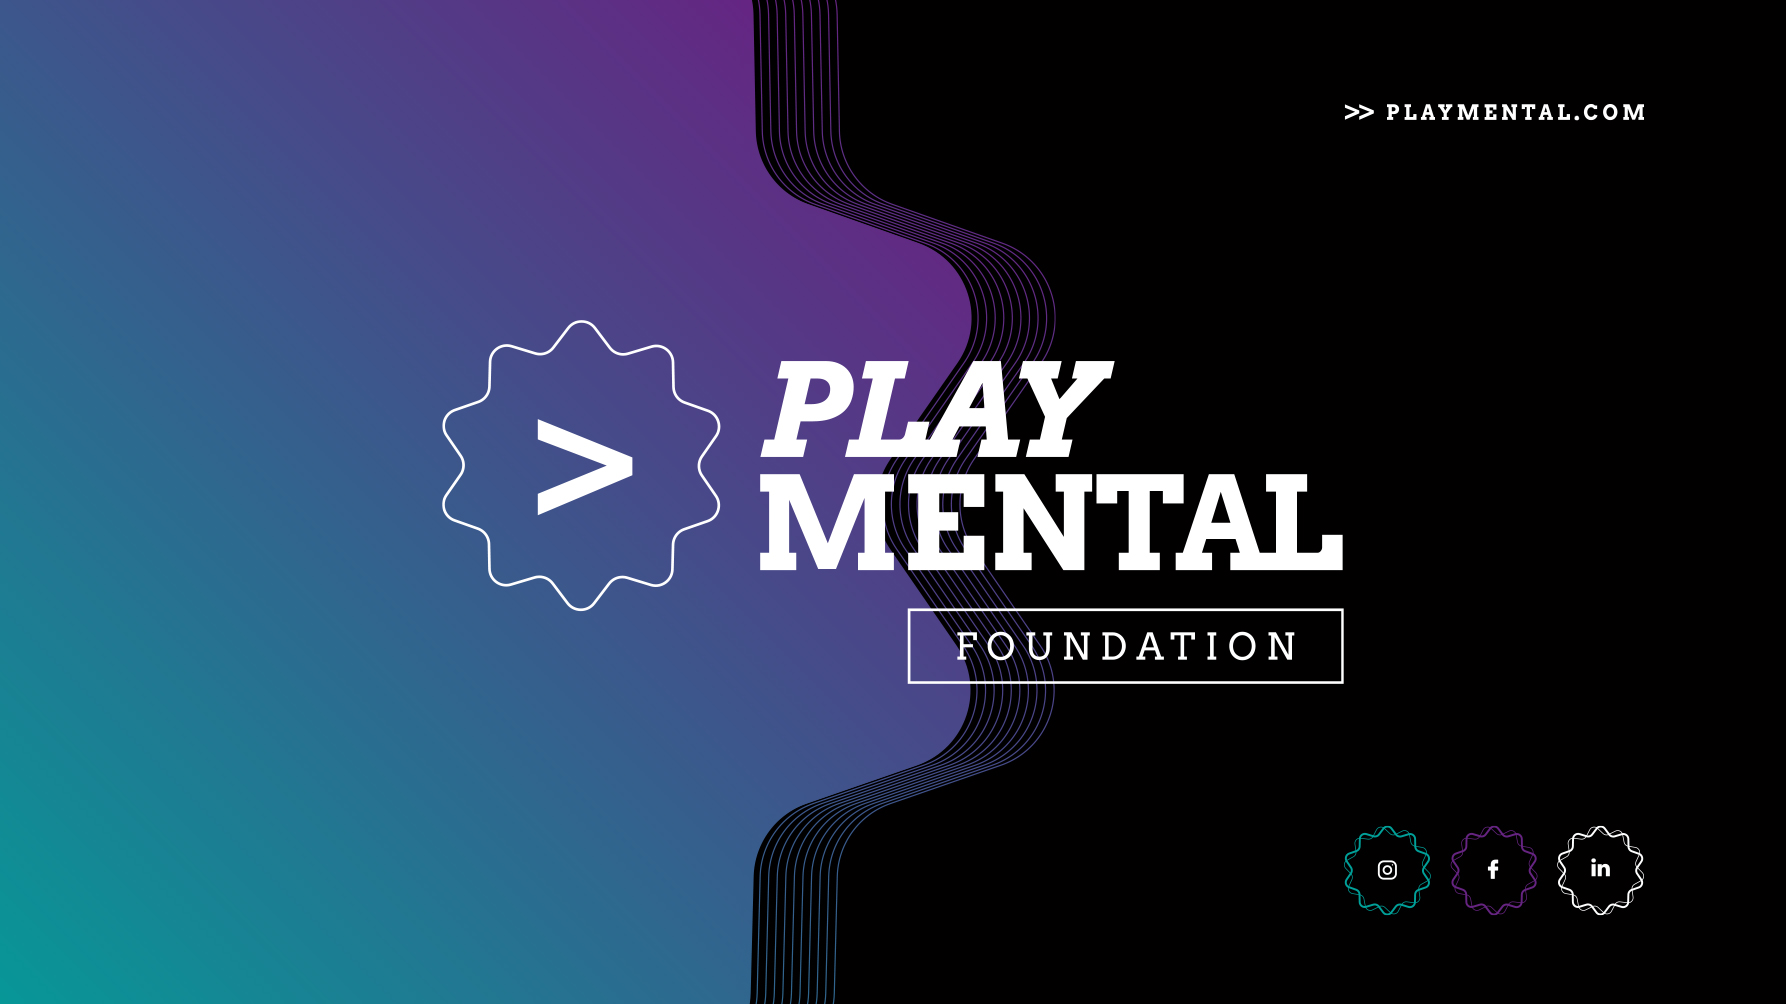 play-mental-foundation-logo-9-create-the-brand